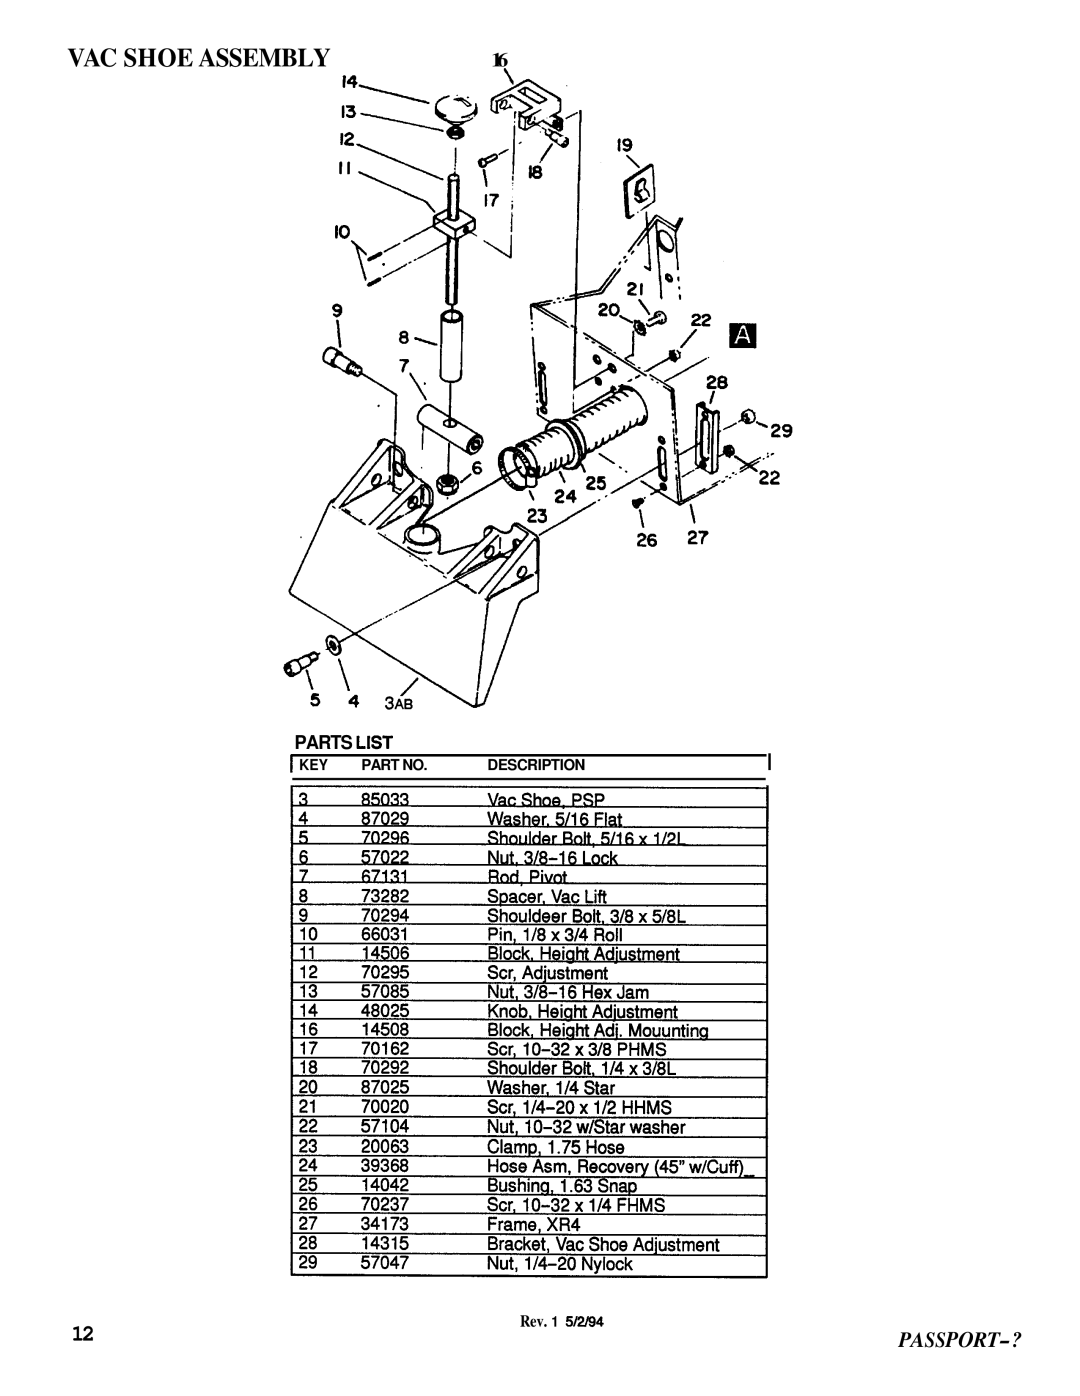 Windsor PSP-IG manual Vac Shoe Assembly, Passport-?, Parts List, Ikey Part No, Description, Rev. 1 5/2/94 